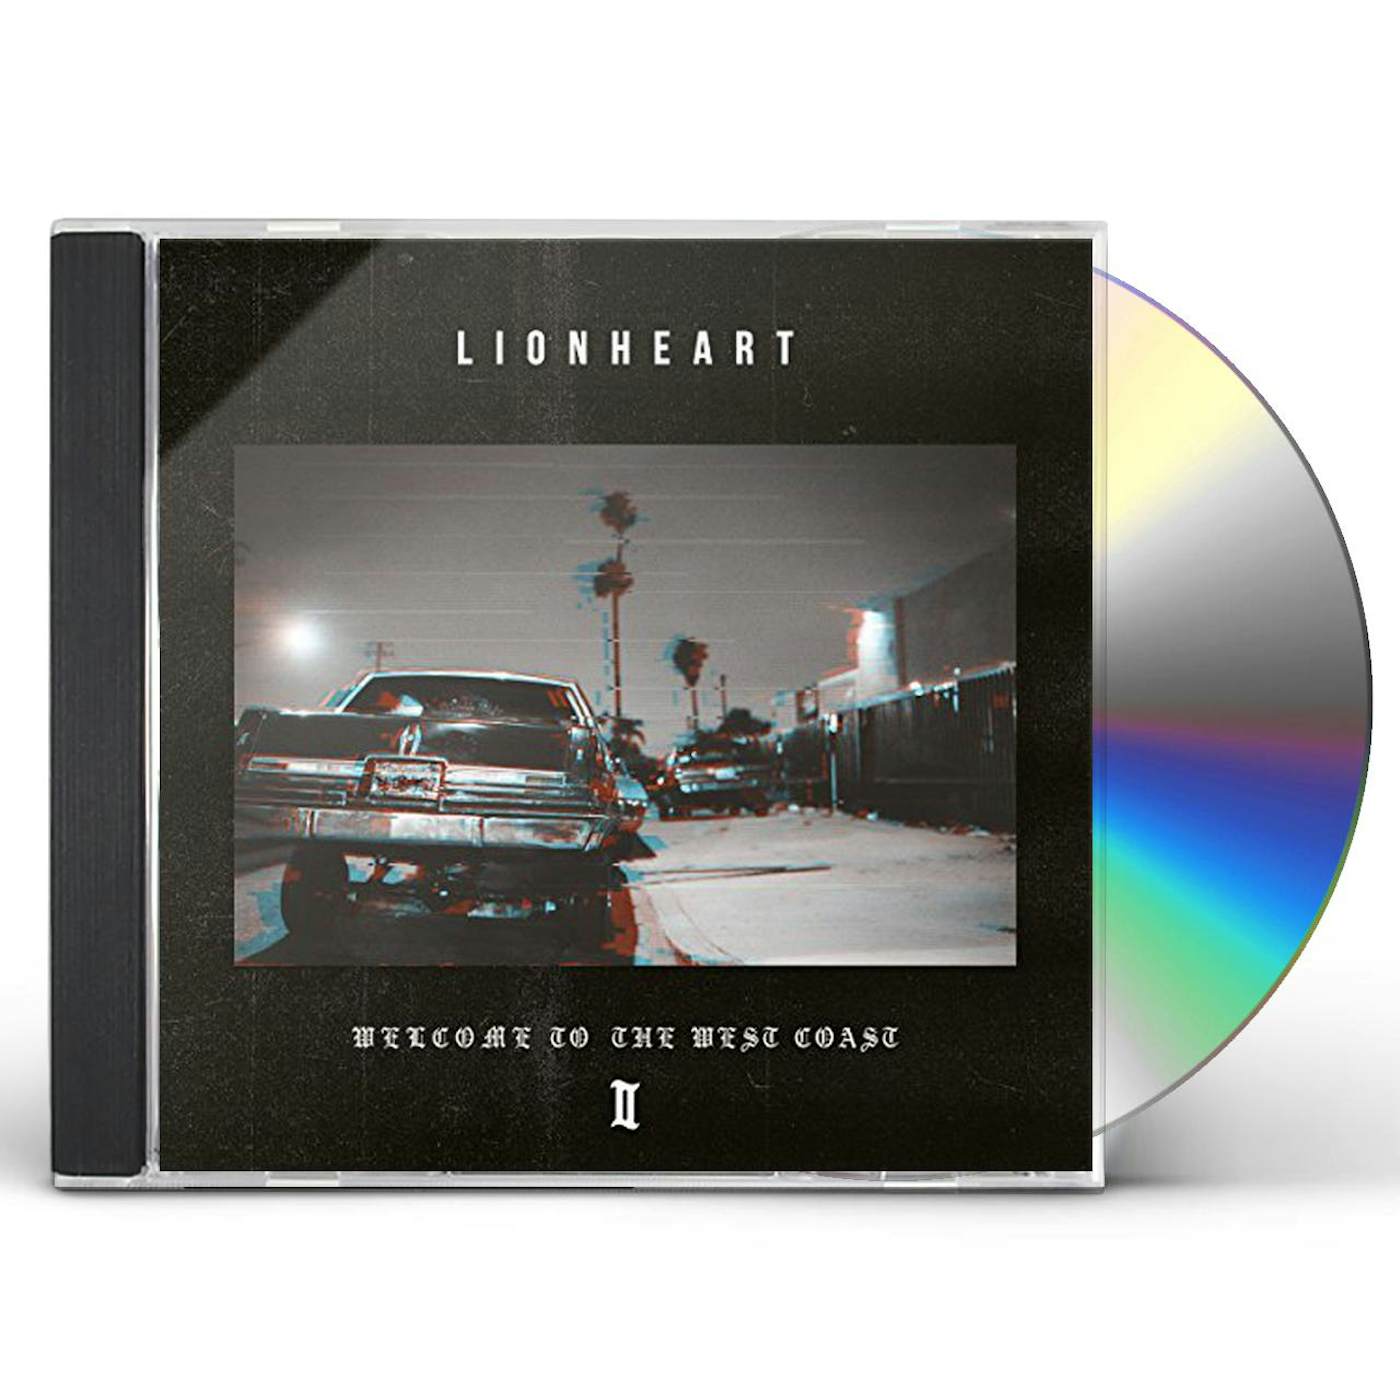 Lionheart WELCOME TO THE WEST COAST II CD